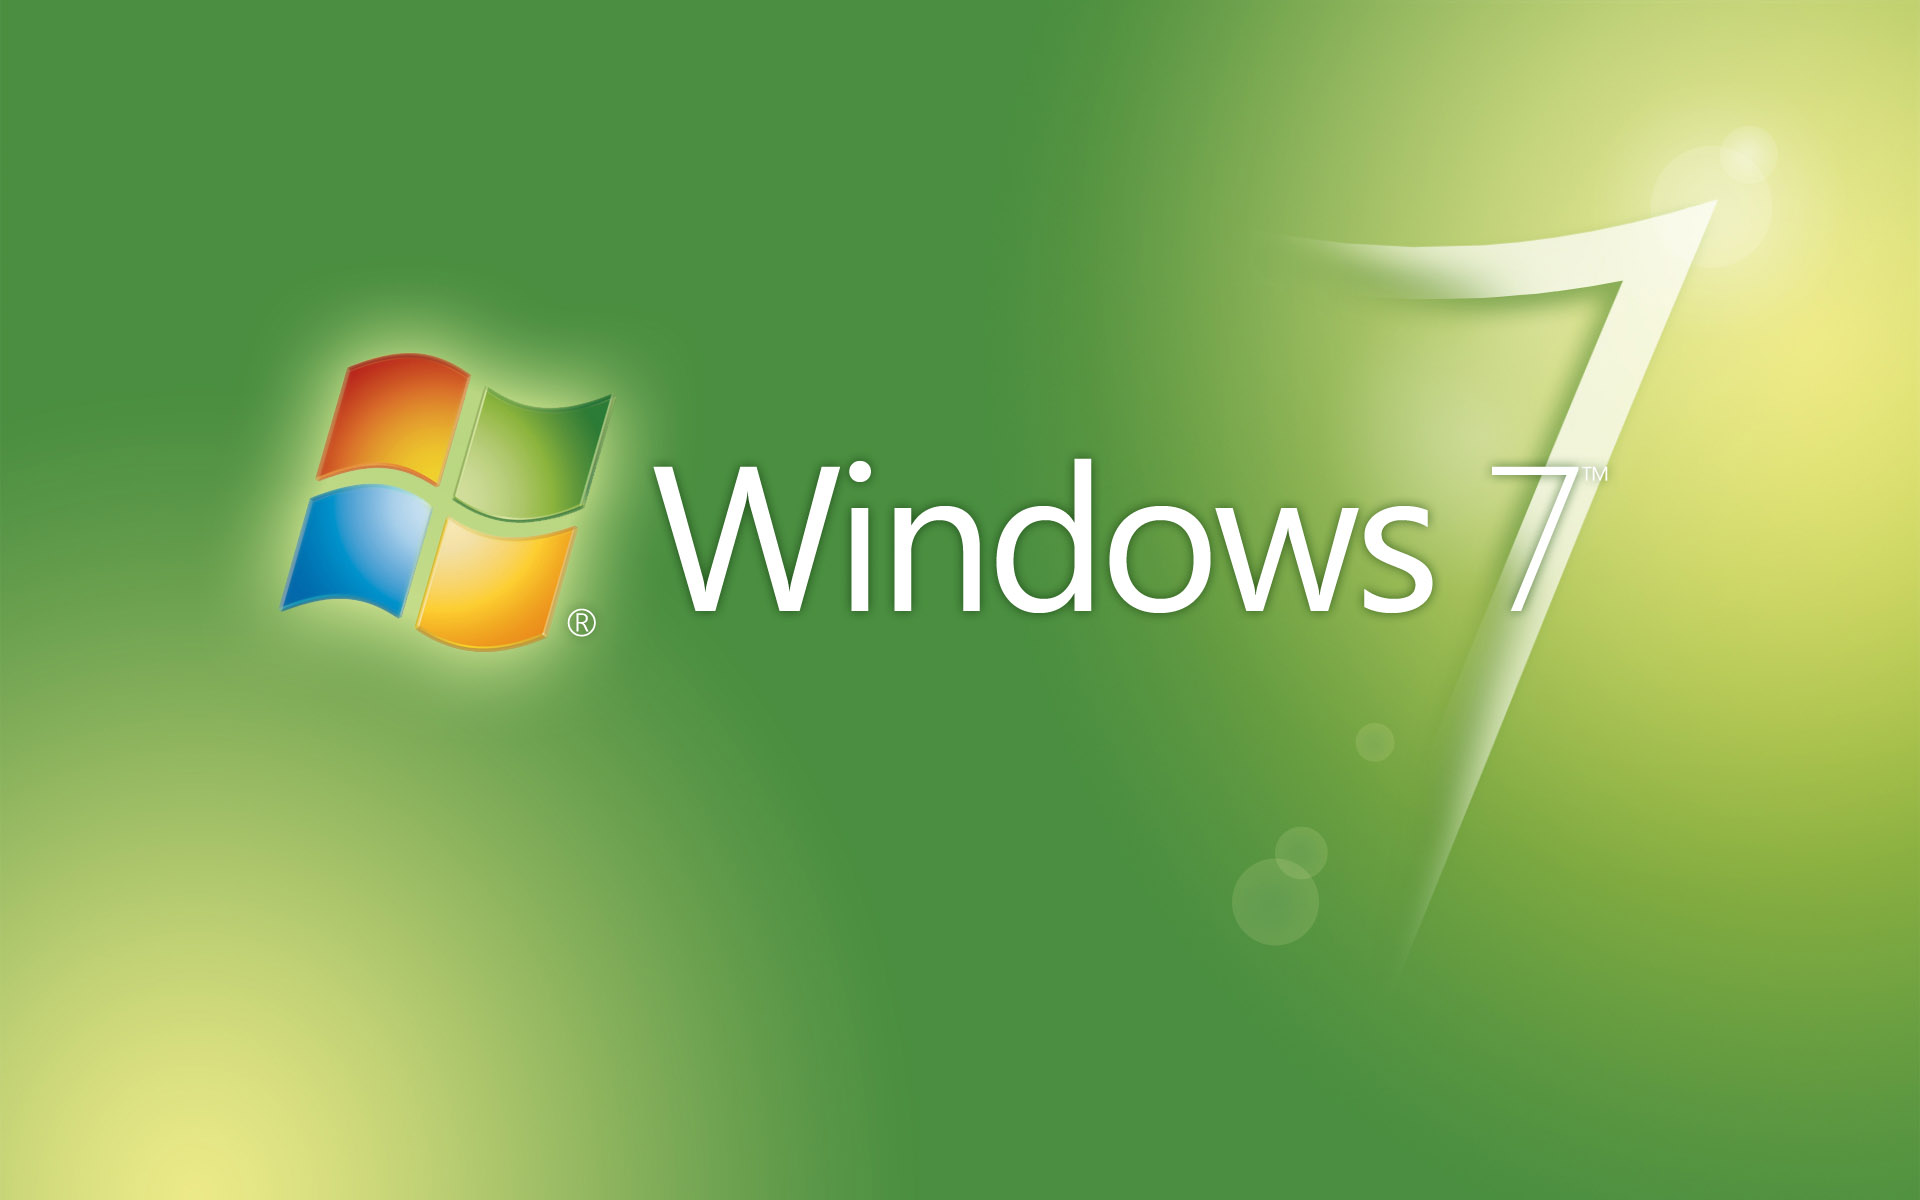 Windows 7 Hd Backgrounds